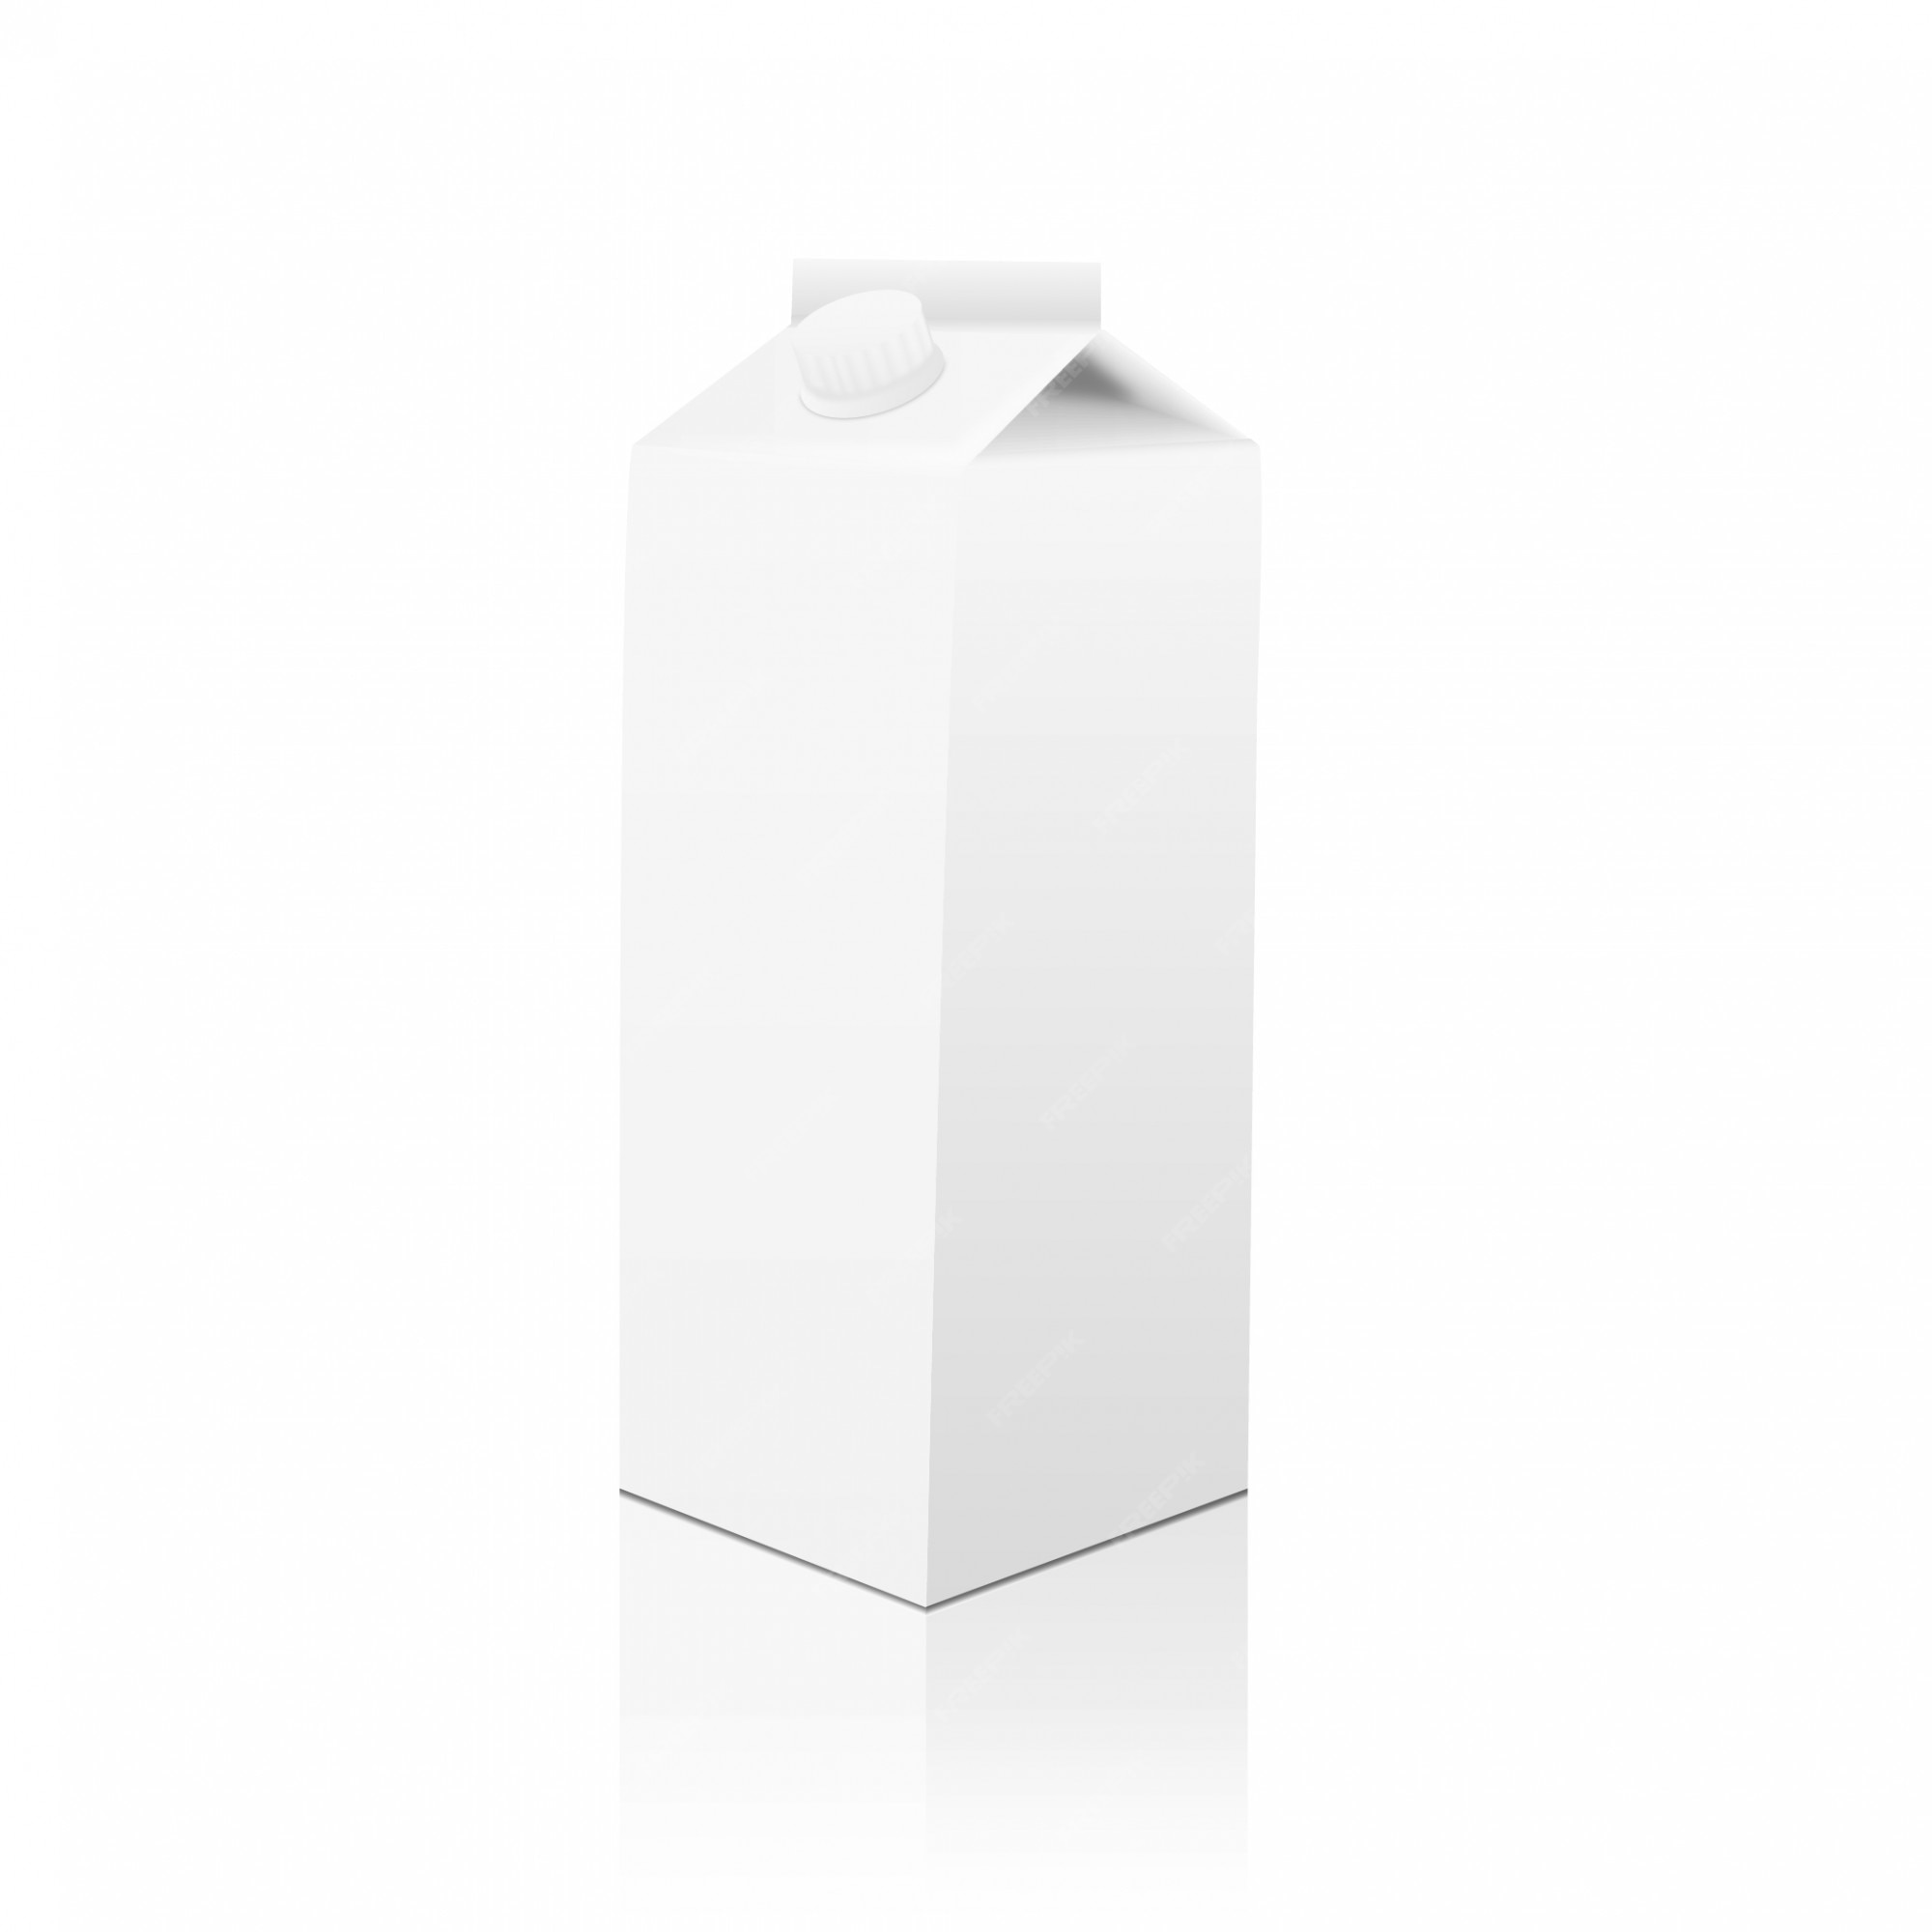 Envase de cartón blanco para lácteos, o bebidas. | Vector Premium